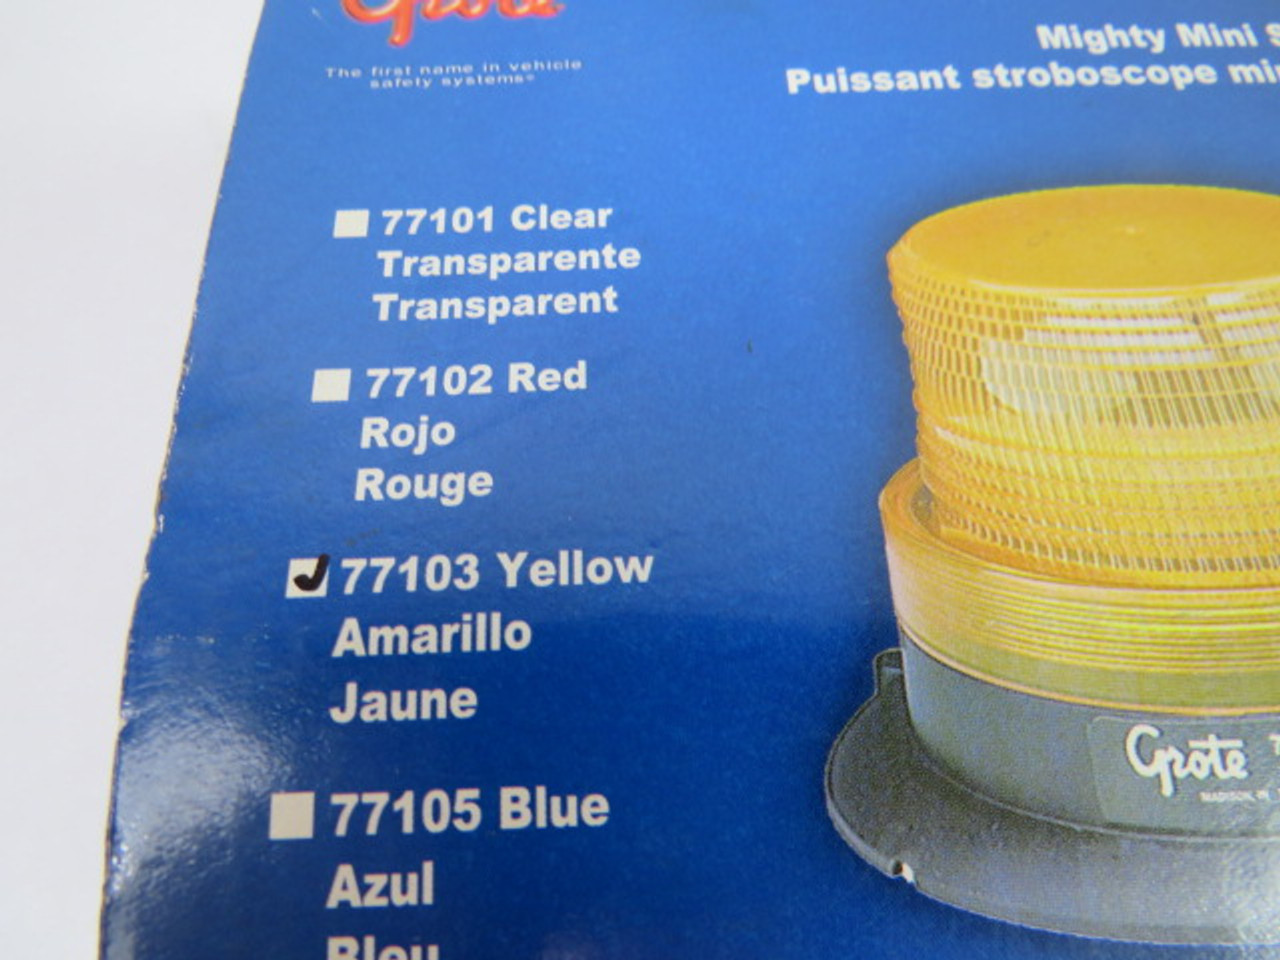 Grote 77103 Yellow Mini Strobe Light 12-80VDC ! NEW !